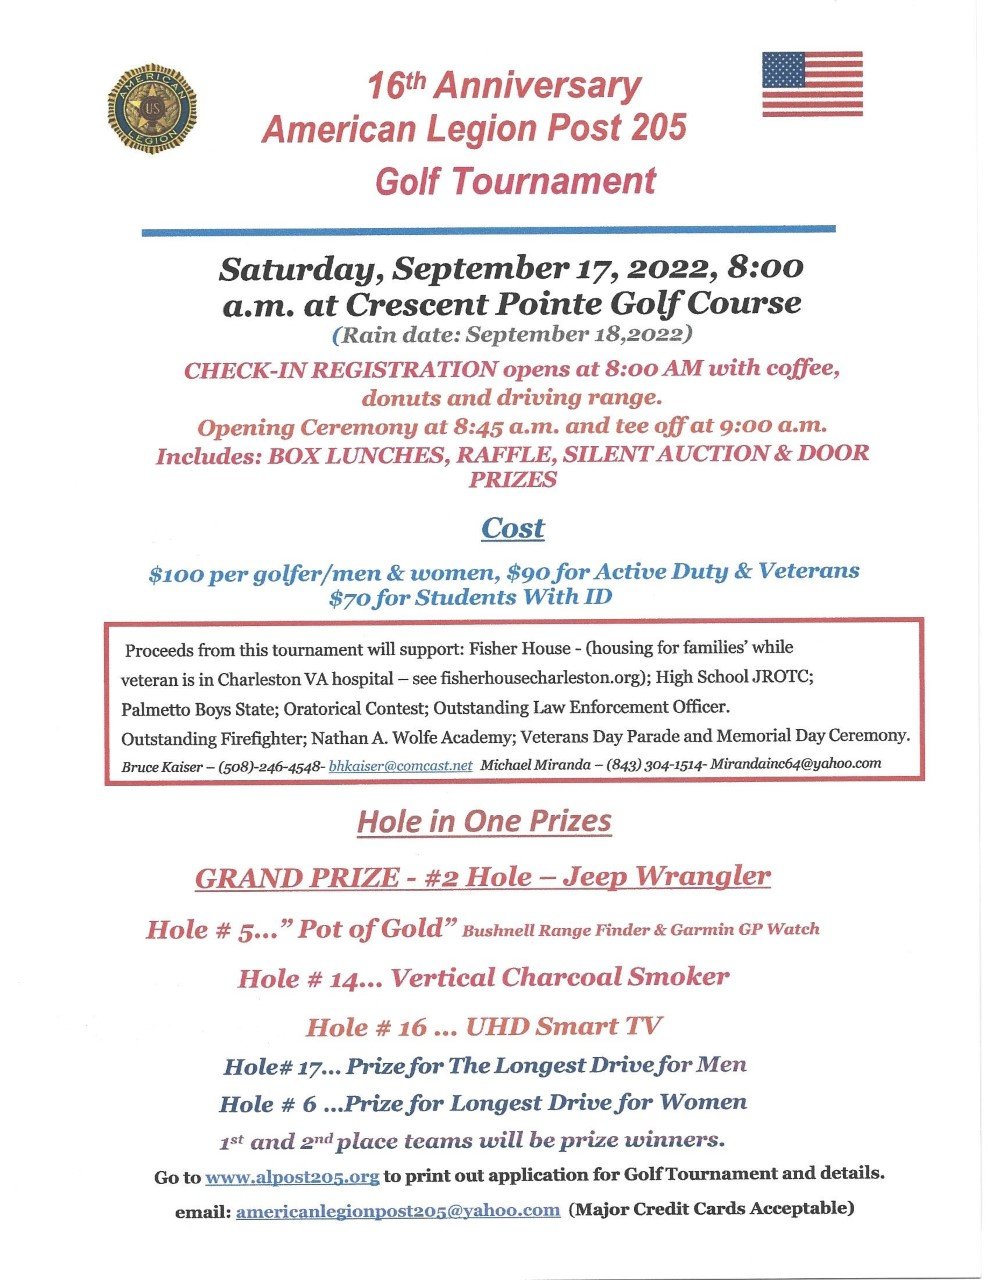 American Legion Golf Tournament